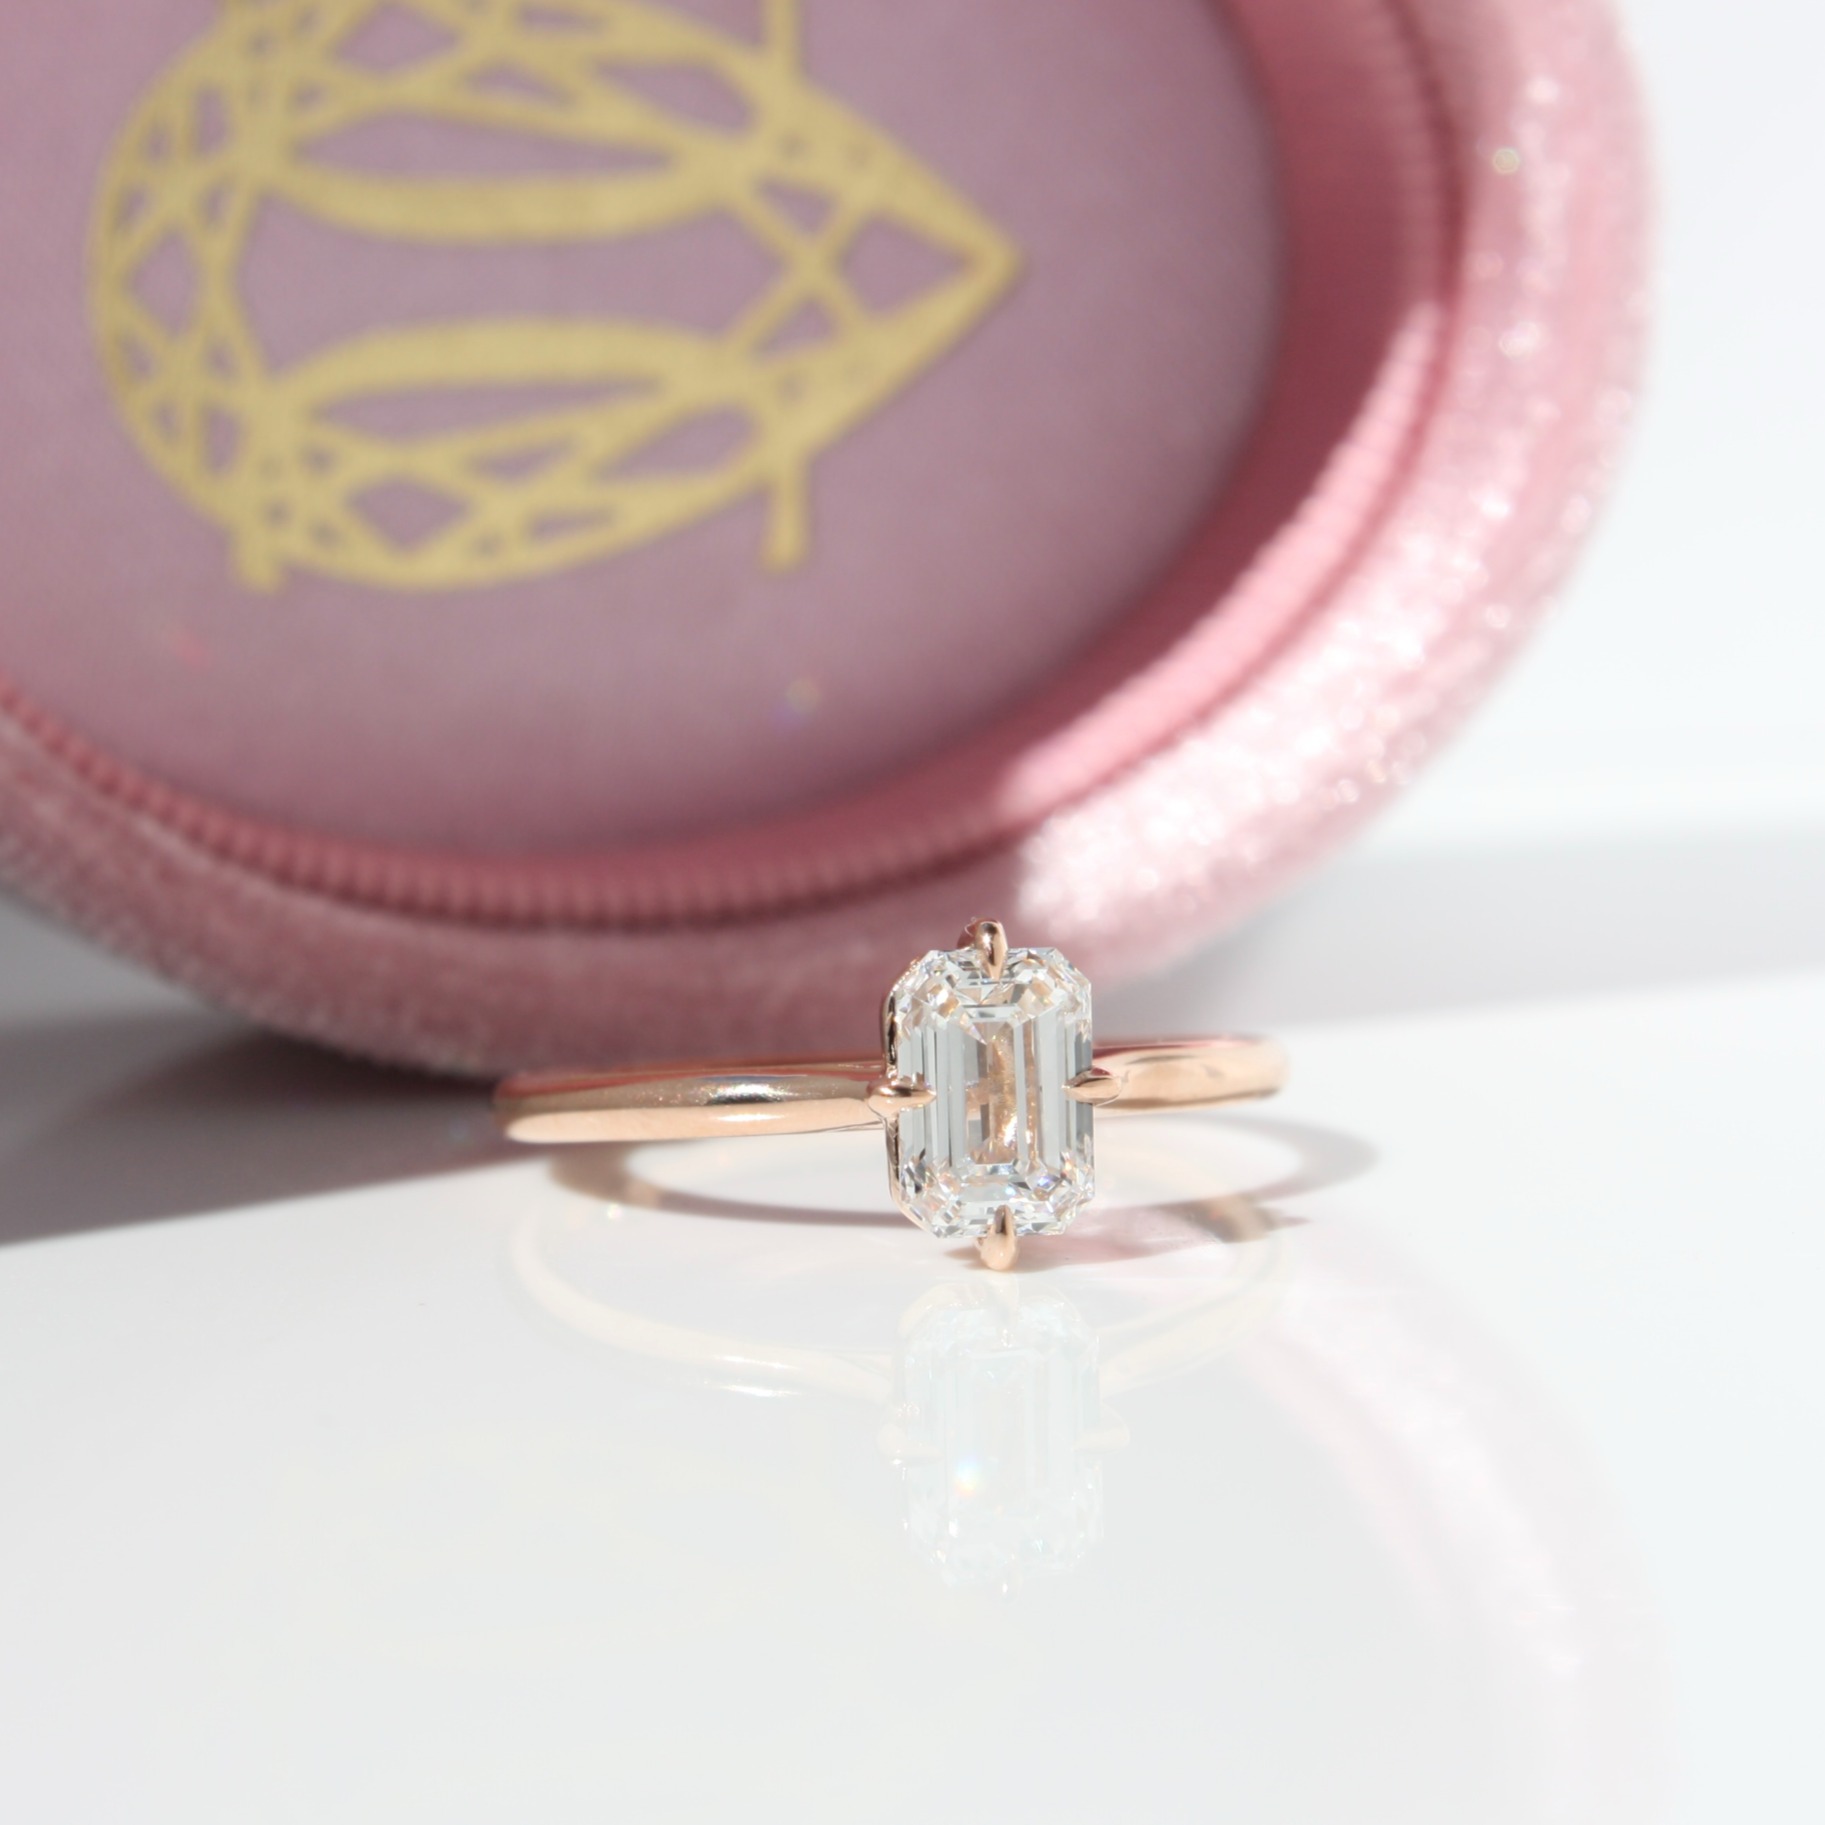 Emerald Cut Compass Solitaire Diamond Ring, diamond ring, diamond engagement ring, engagement ring, emerald cut diamond, danielle camera jewellery